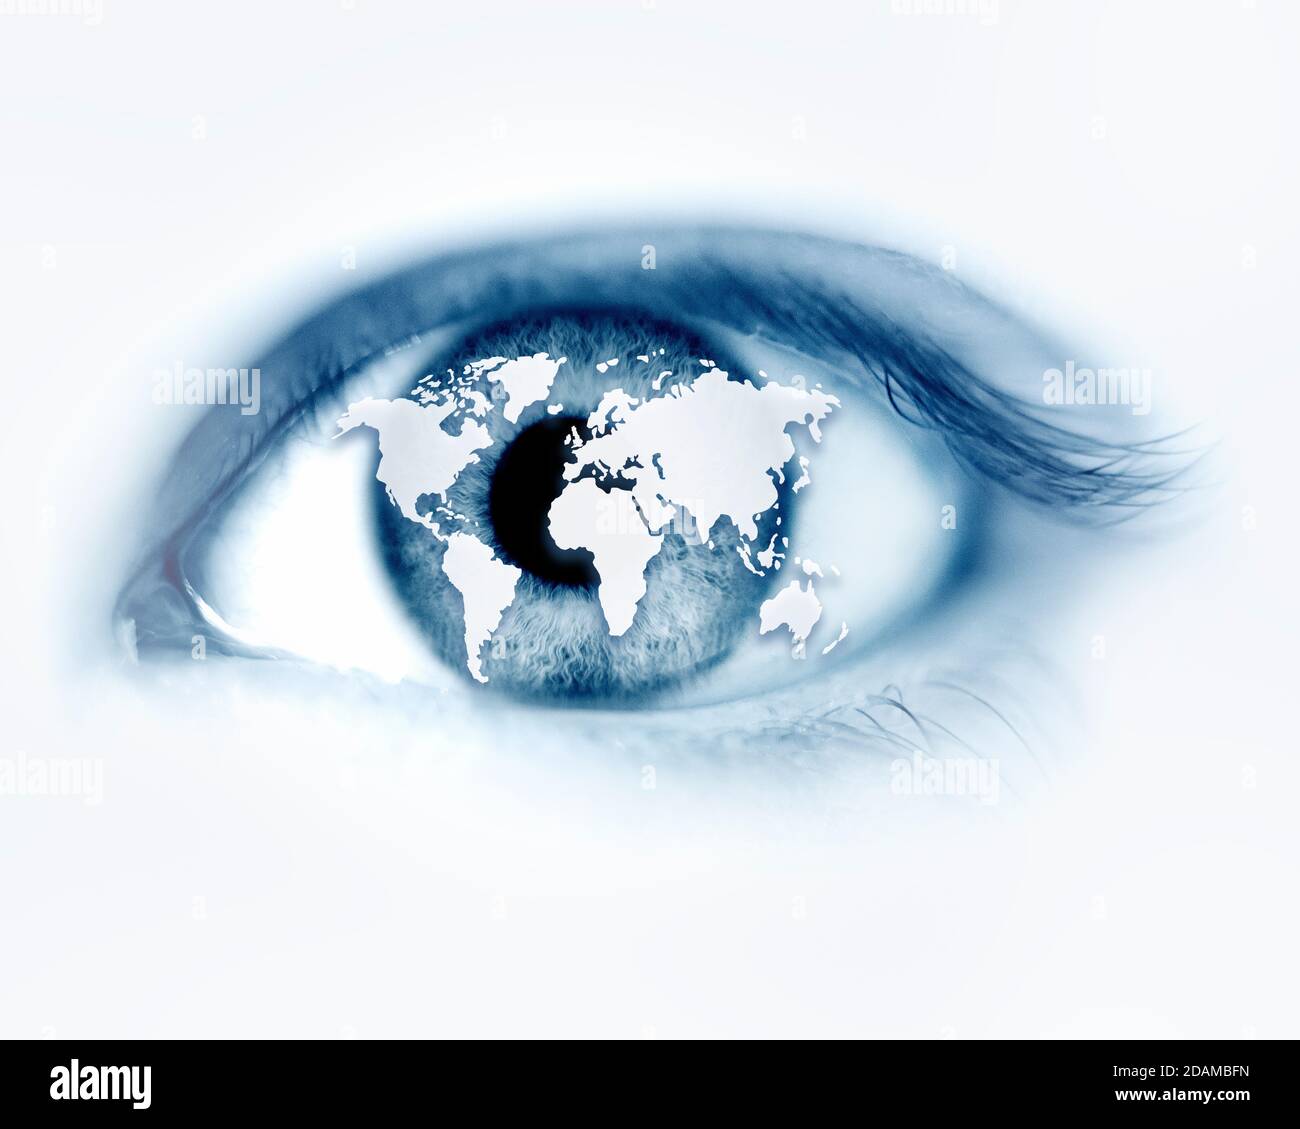 Human eye with world map, illustration. Stock Photo